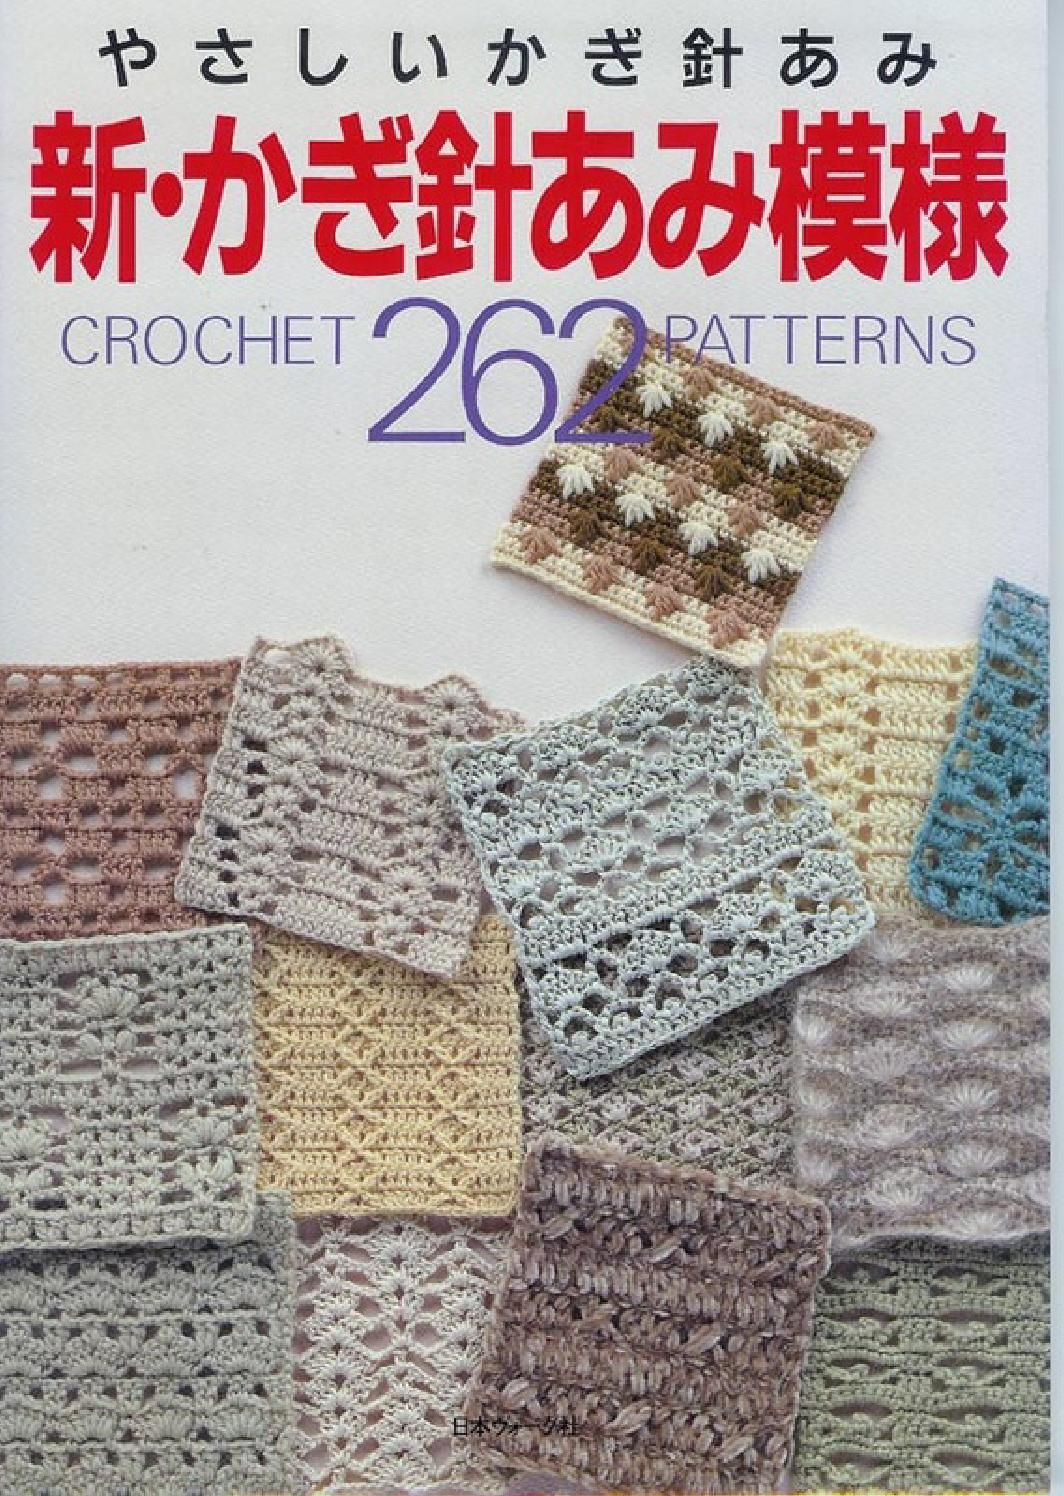 Japanese Crochet Patterns 262 Crochet Patterns Yarn Love Crochet Patterns Crochet